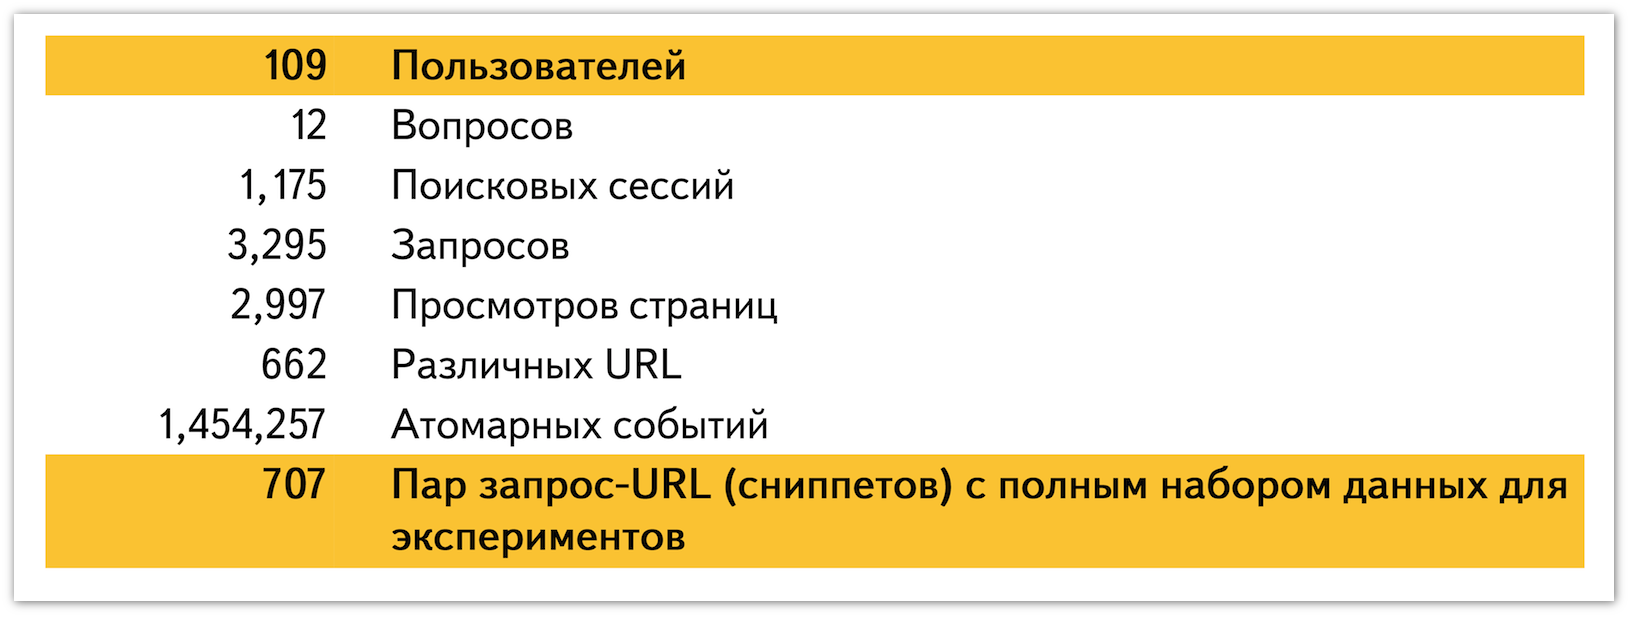 Анализ неявных предпочтений пользователей. Научно технический семинар в Яндексе